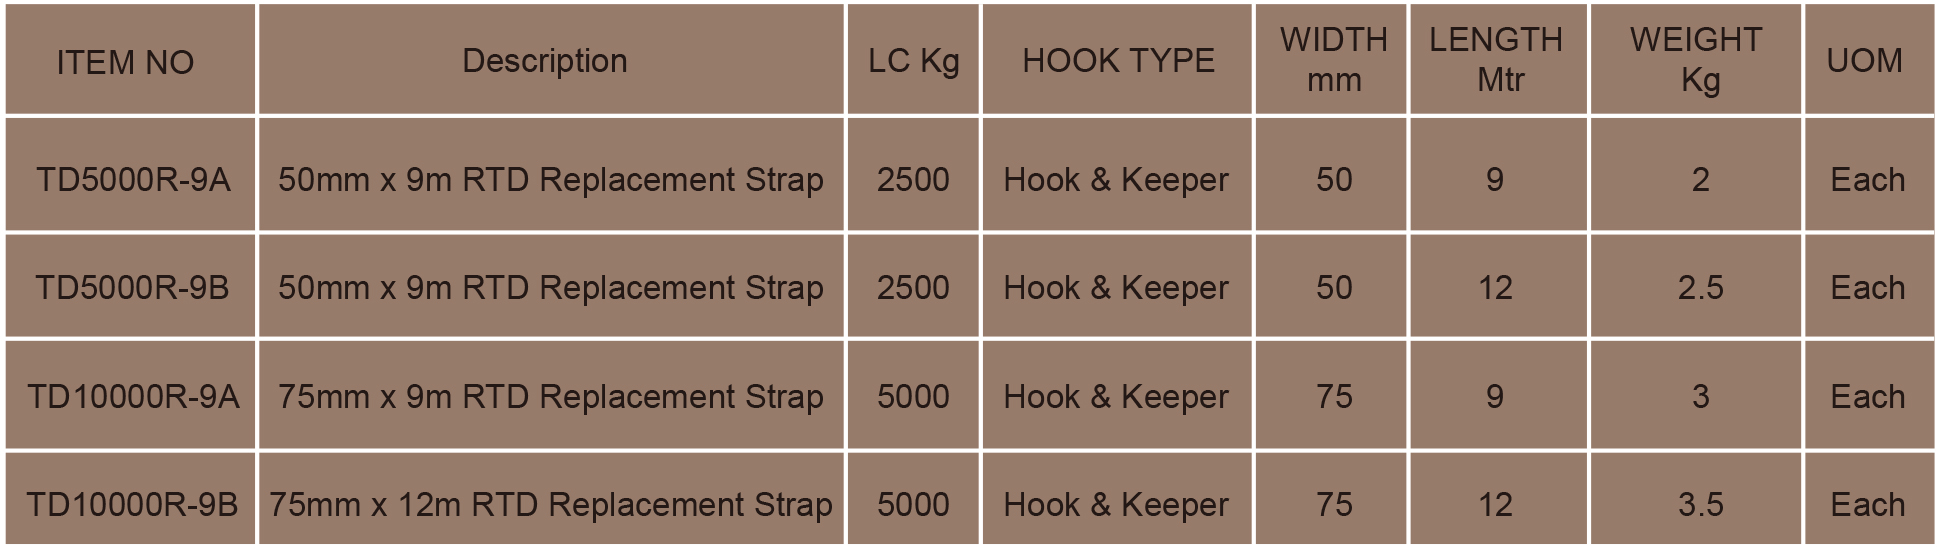 18- AU-standard Ratchet Tie-Down Polyester Replacement Straps 9m,LC 3000kg